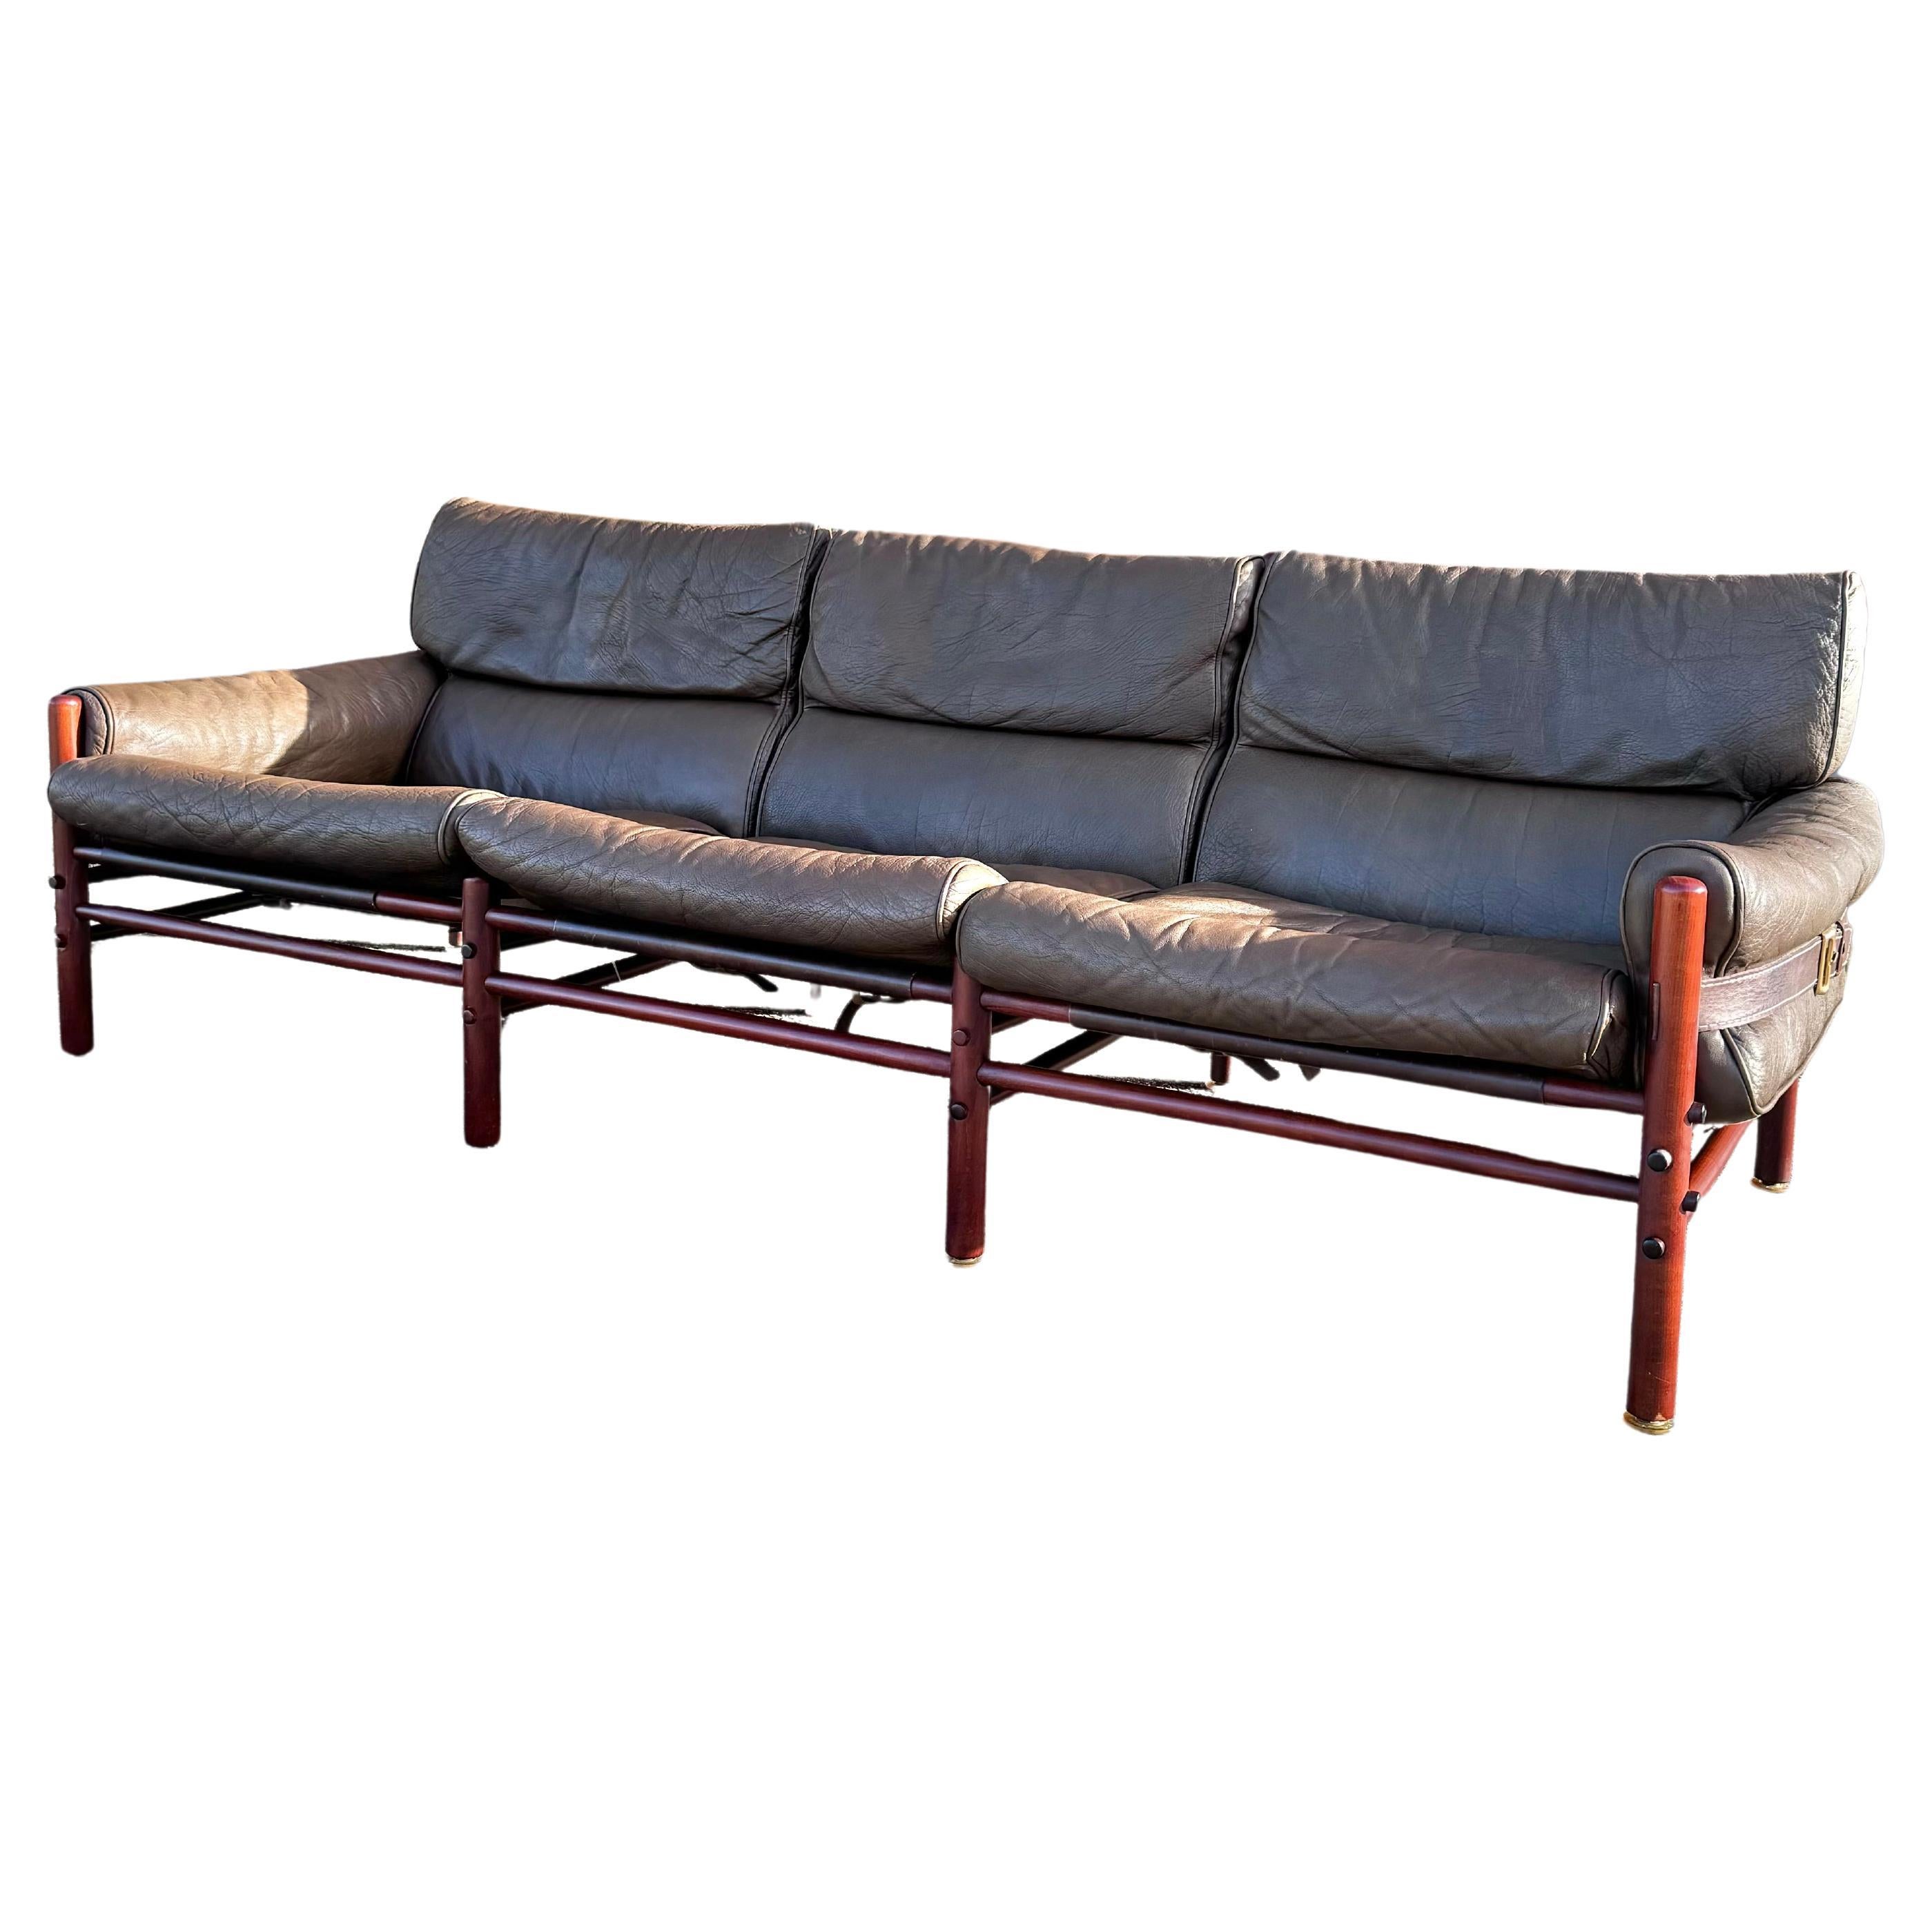 3-seatet ”kontiki” sofa by Arne Norell